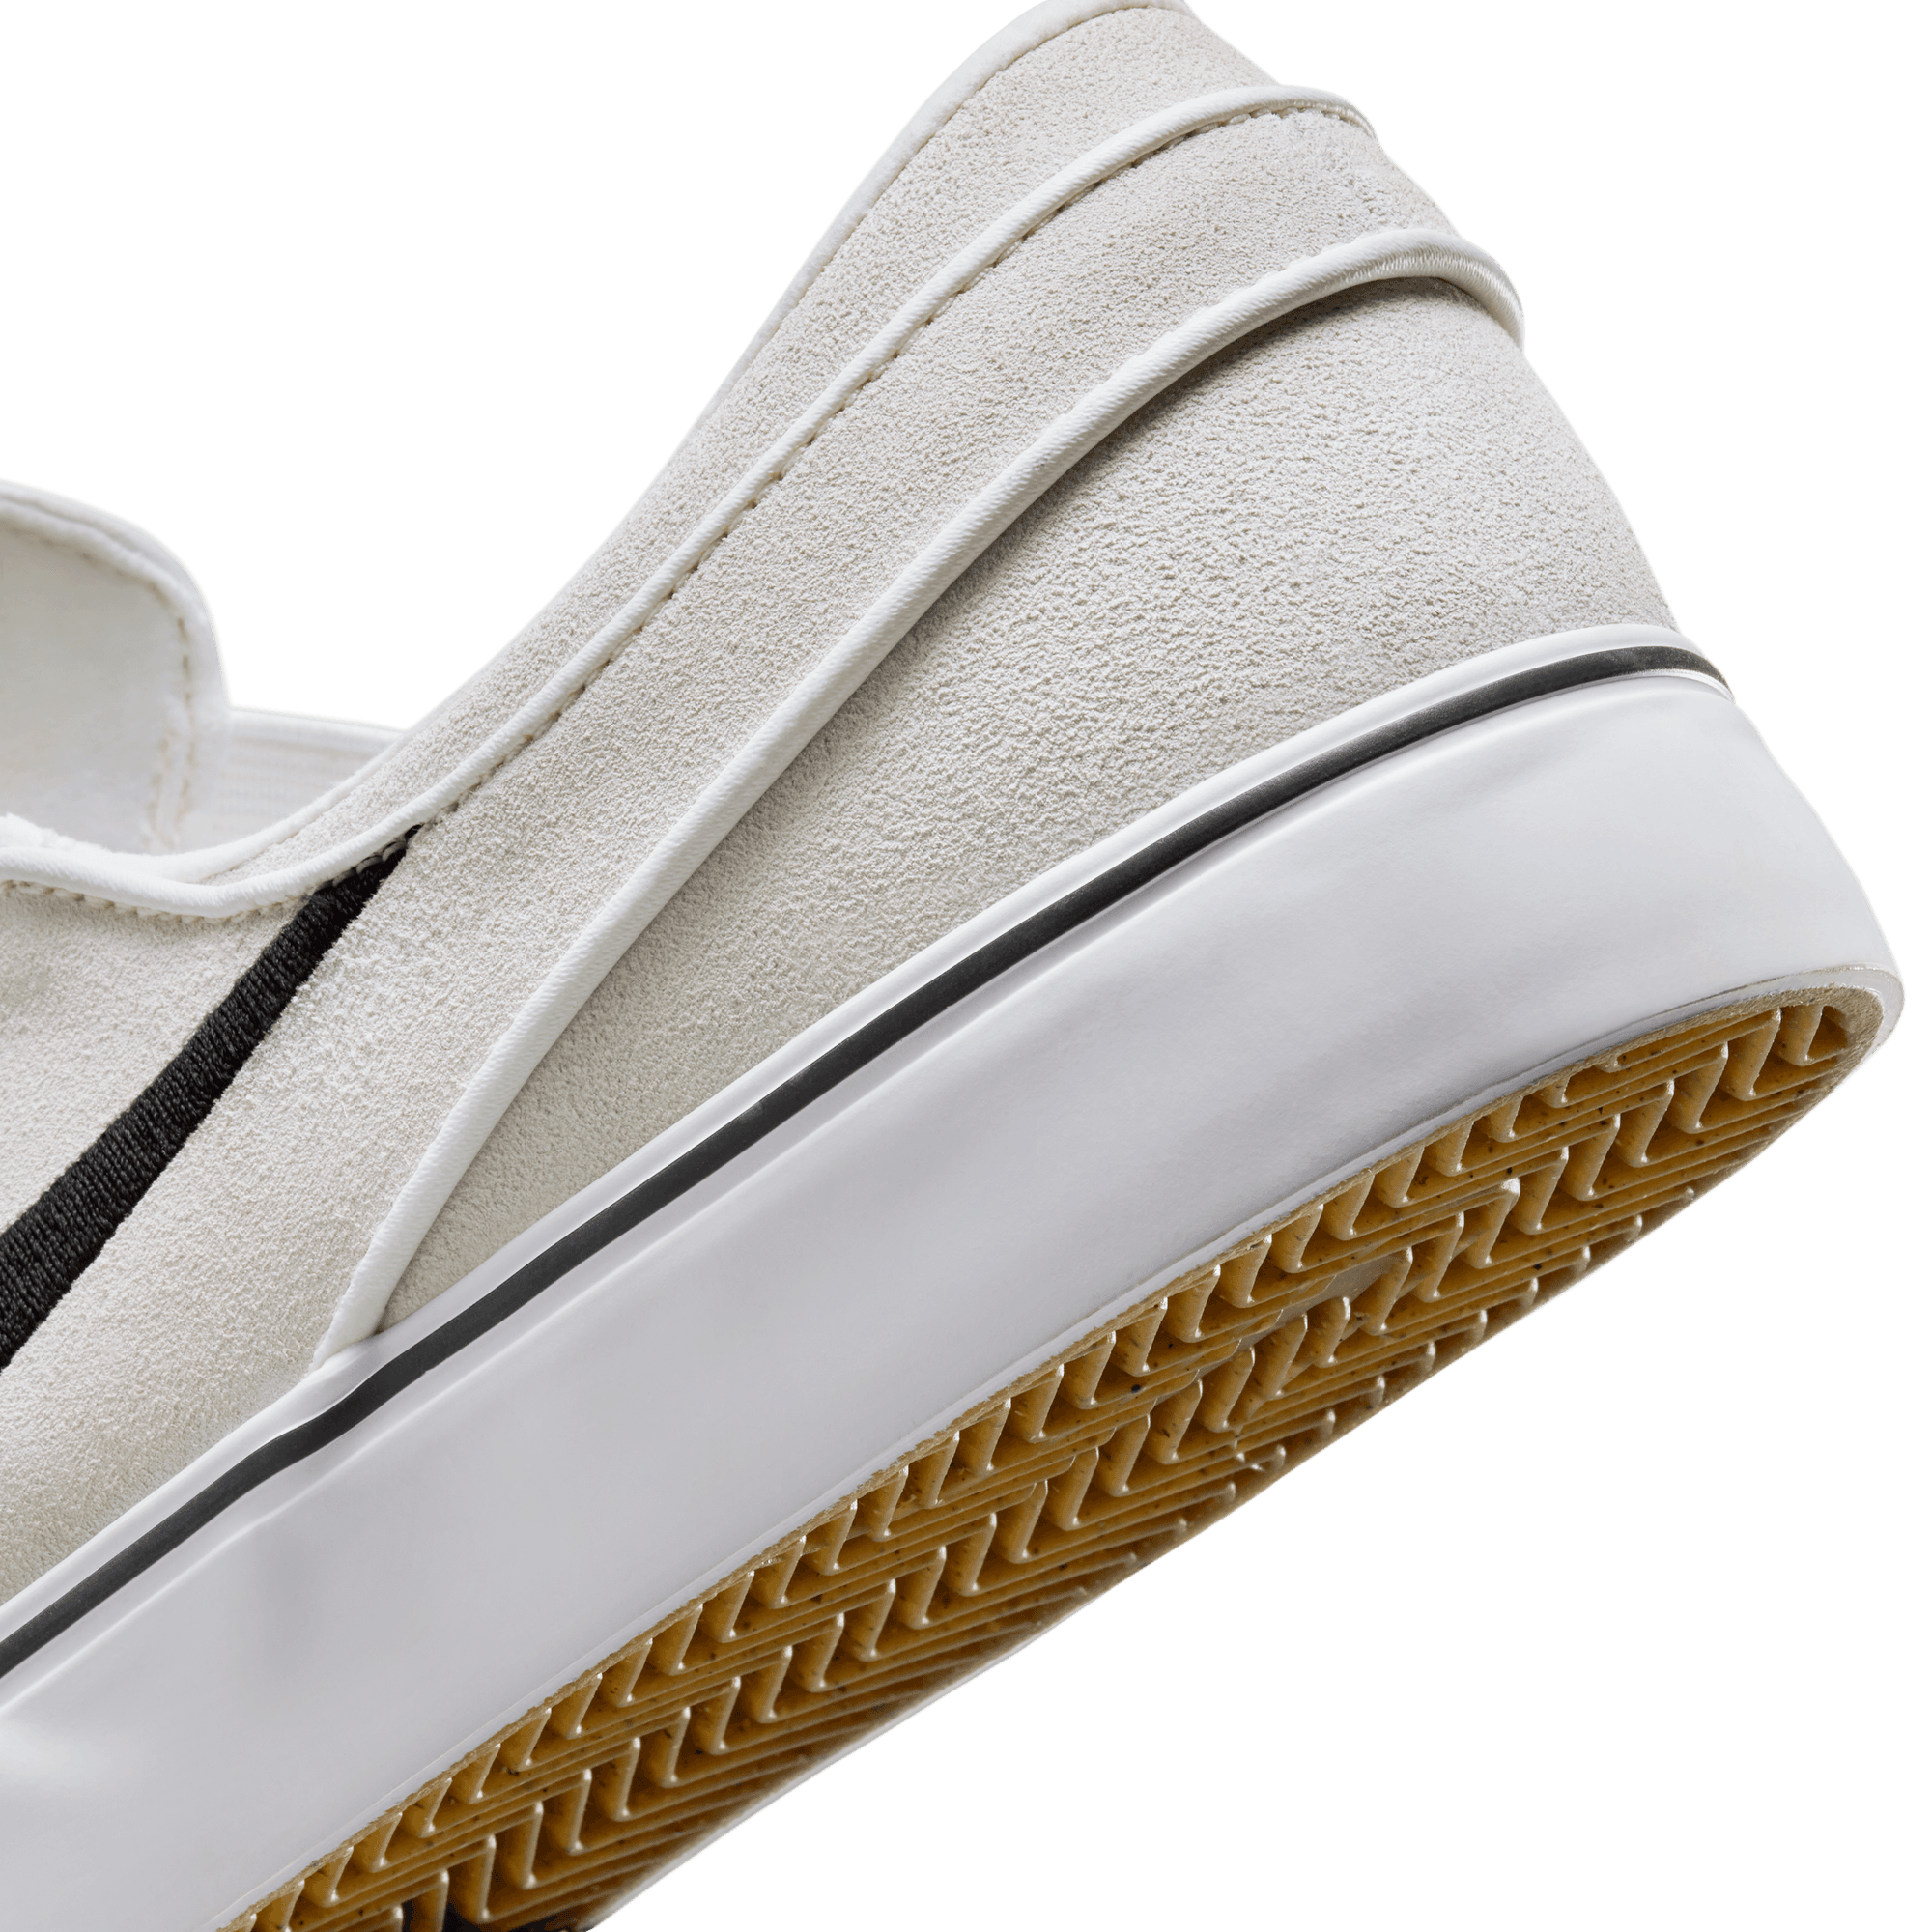 Summit White Janoski+ Slip On Nike SB Skate Shoe Detail